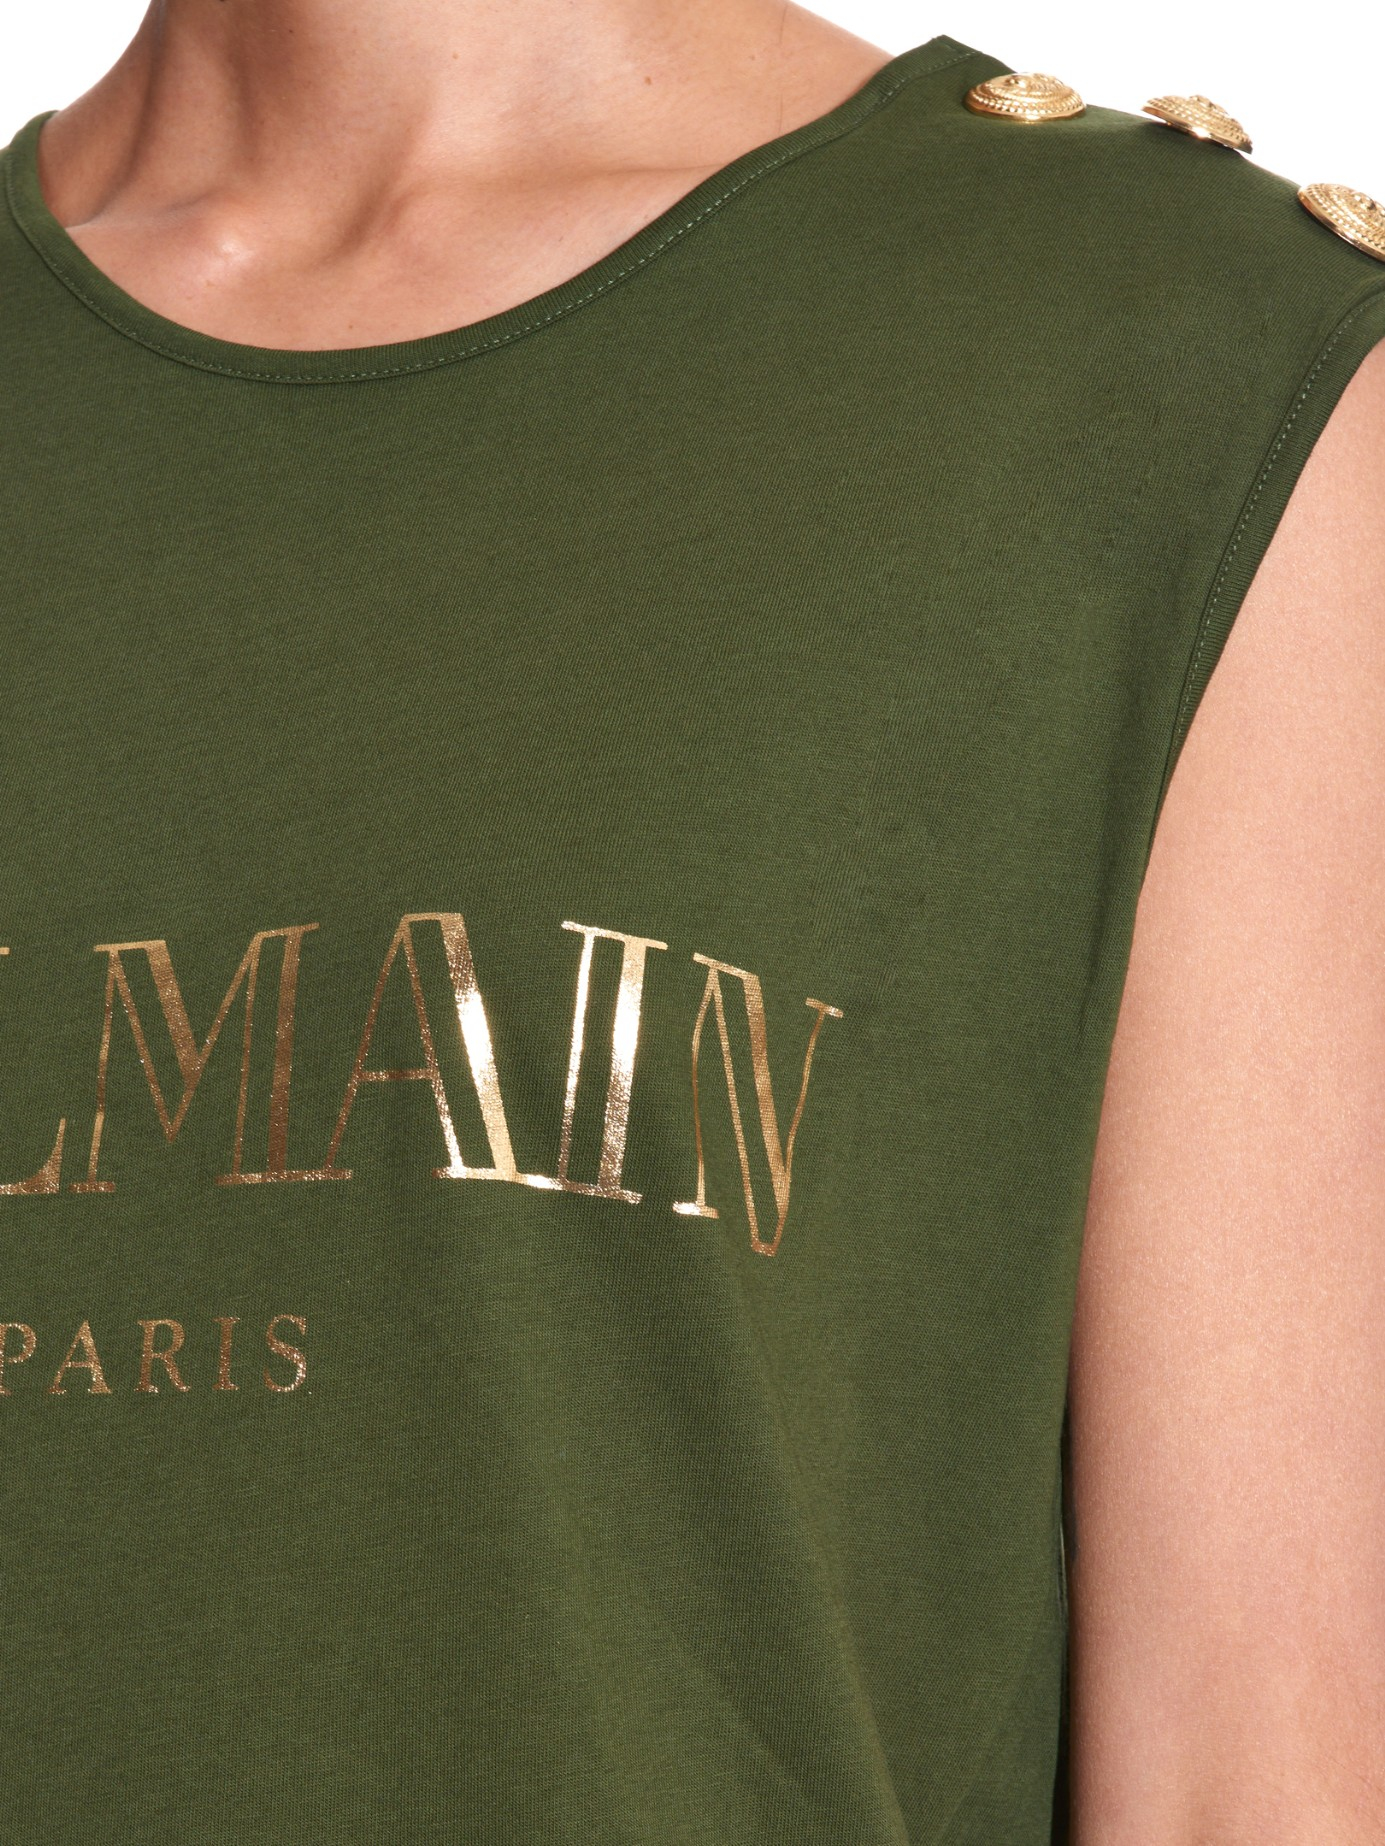 Lyst - Balmain Logo-print Cotton-jersey Tank Top in Green